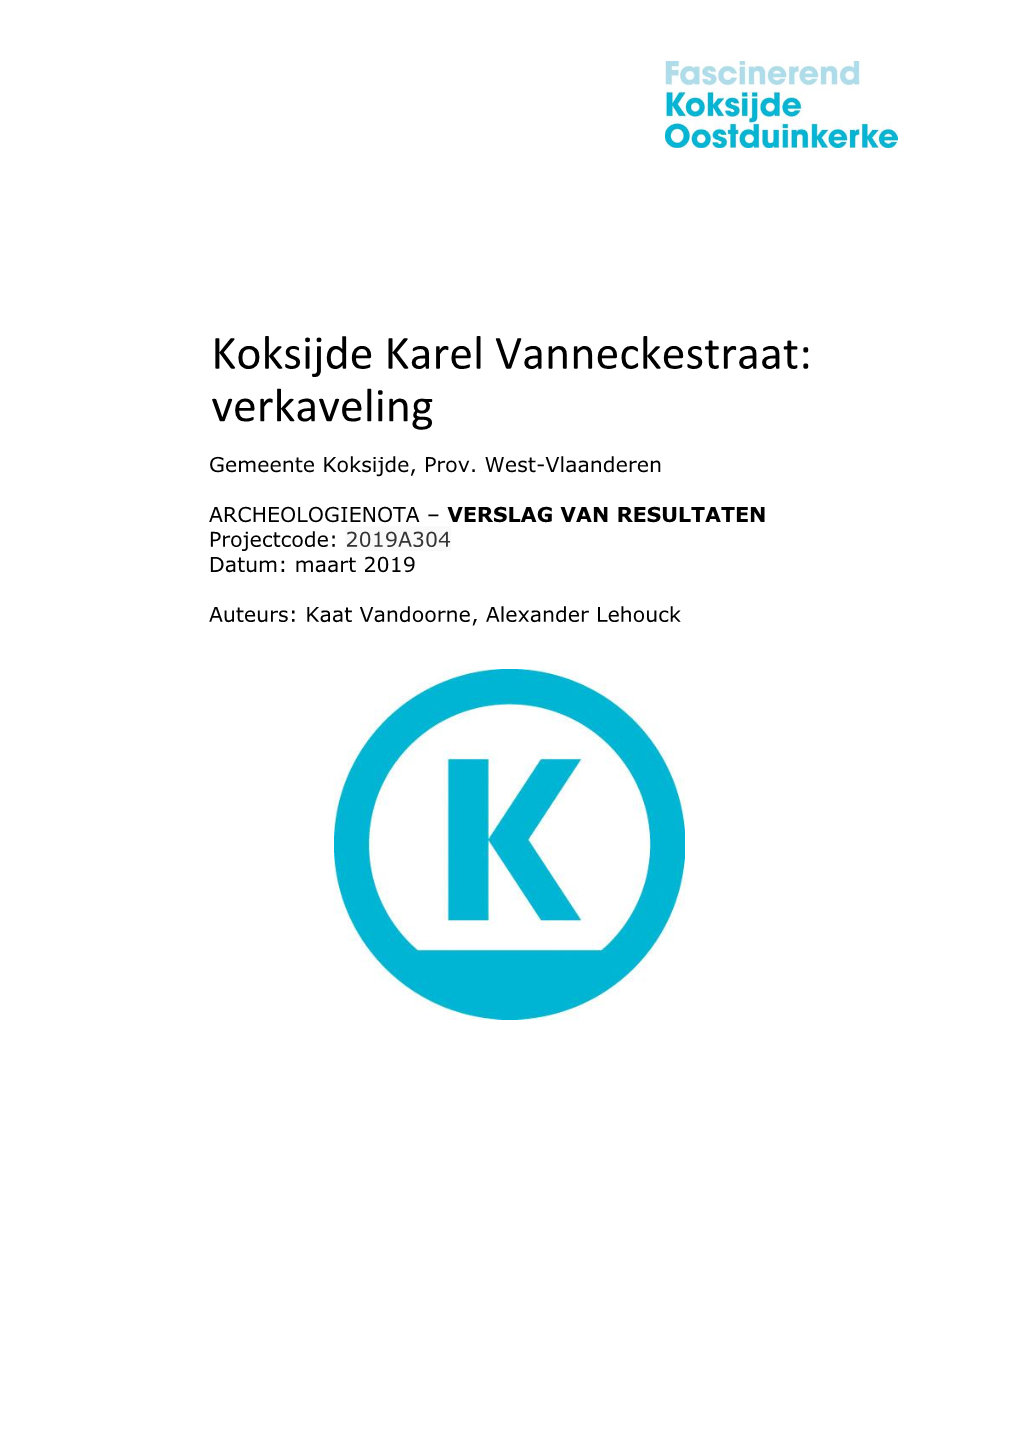 Koksijde Karel Vanneckestraat: Verkaveling Gemeente Koksijde, Prov